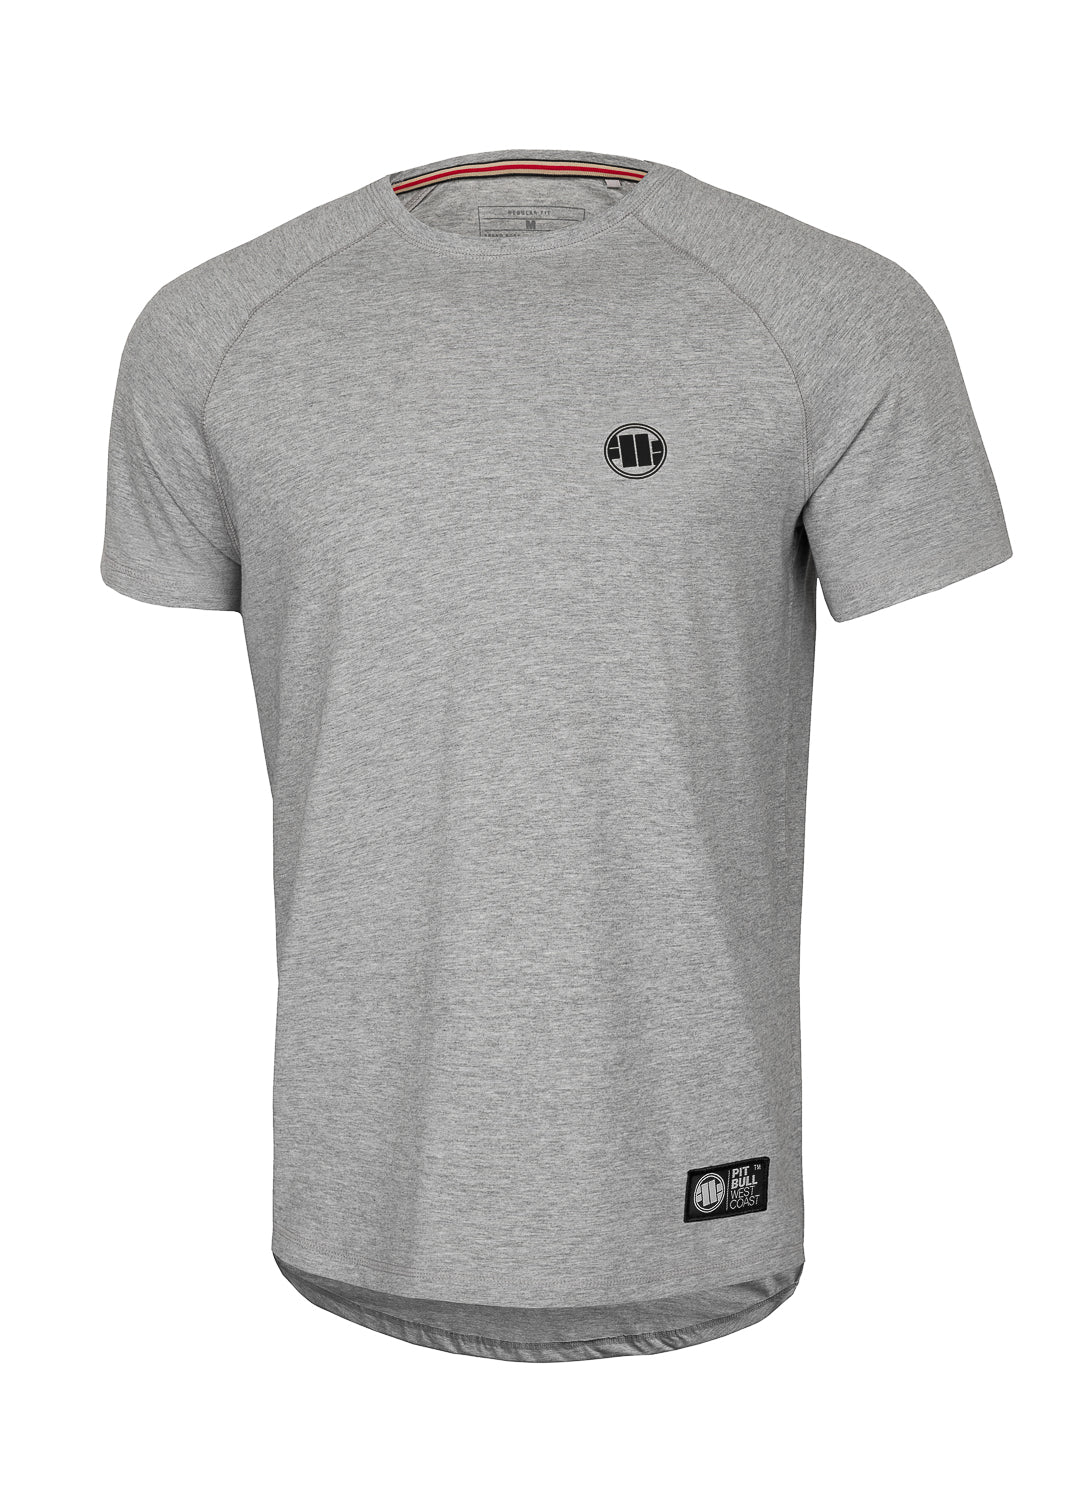 T-shirt Spandex MERCADO 210 GSM Grey - Pitbull West Coast International Store 